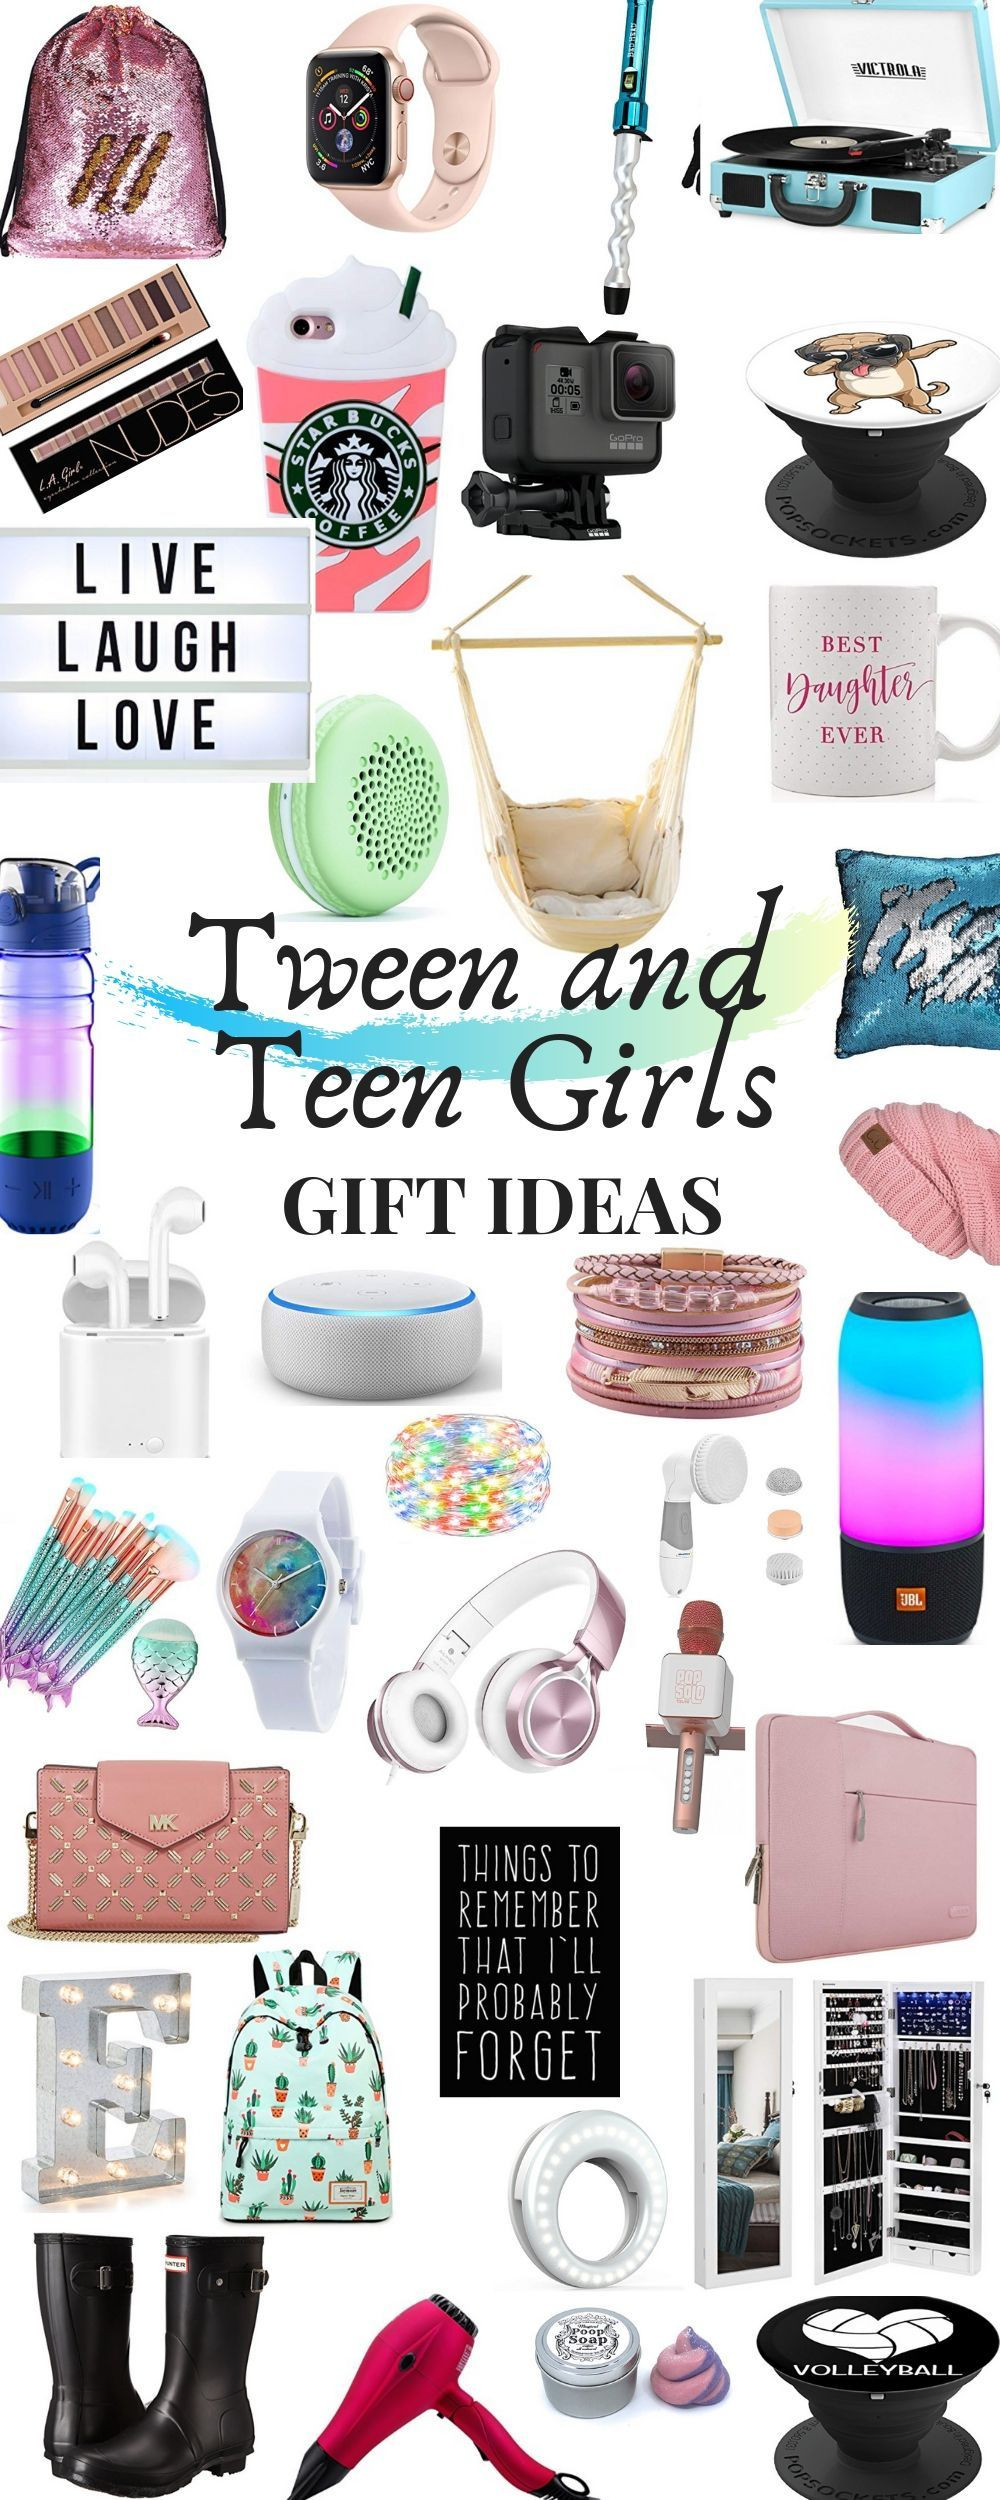 Christmas Gift Ideas For Teen Boyfriends
 Christmas Gift Ideas For Boyfriend Teenage Best t